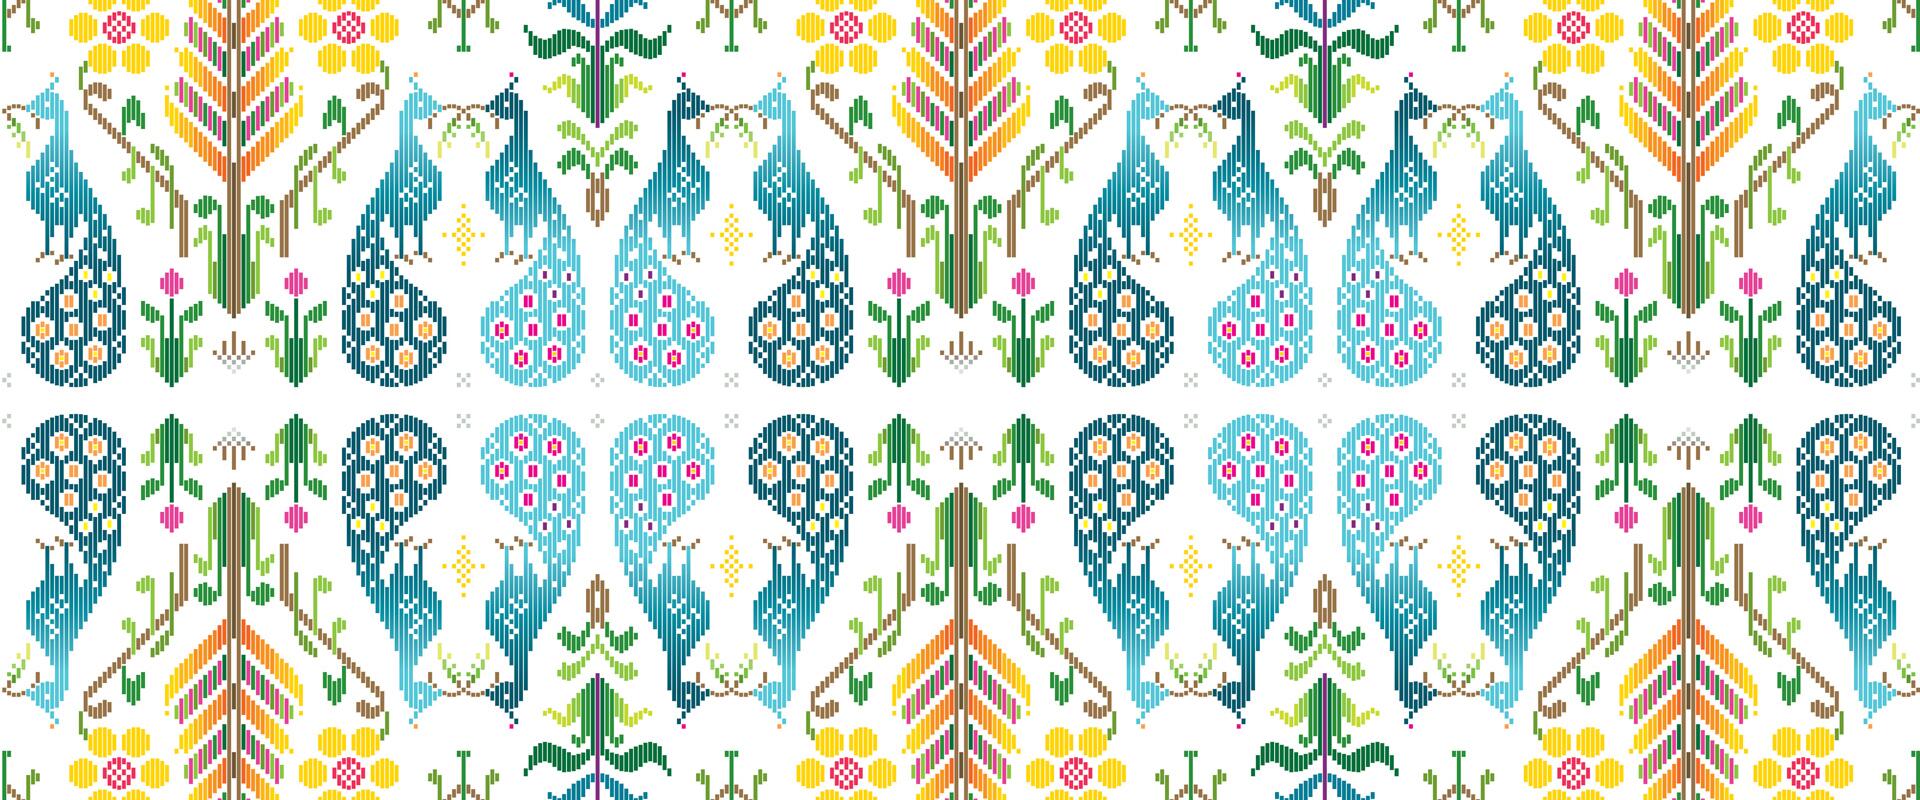 16C-083_Special edition pattern on fabric_Tnop Wangsillapakun